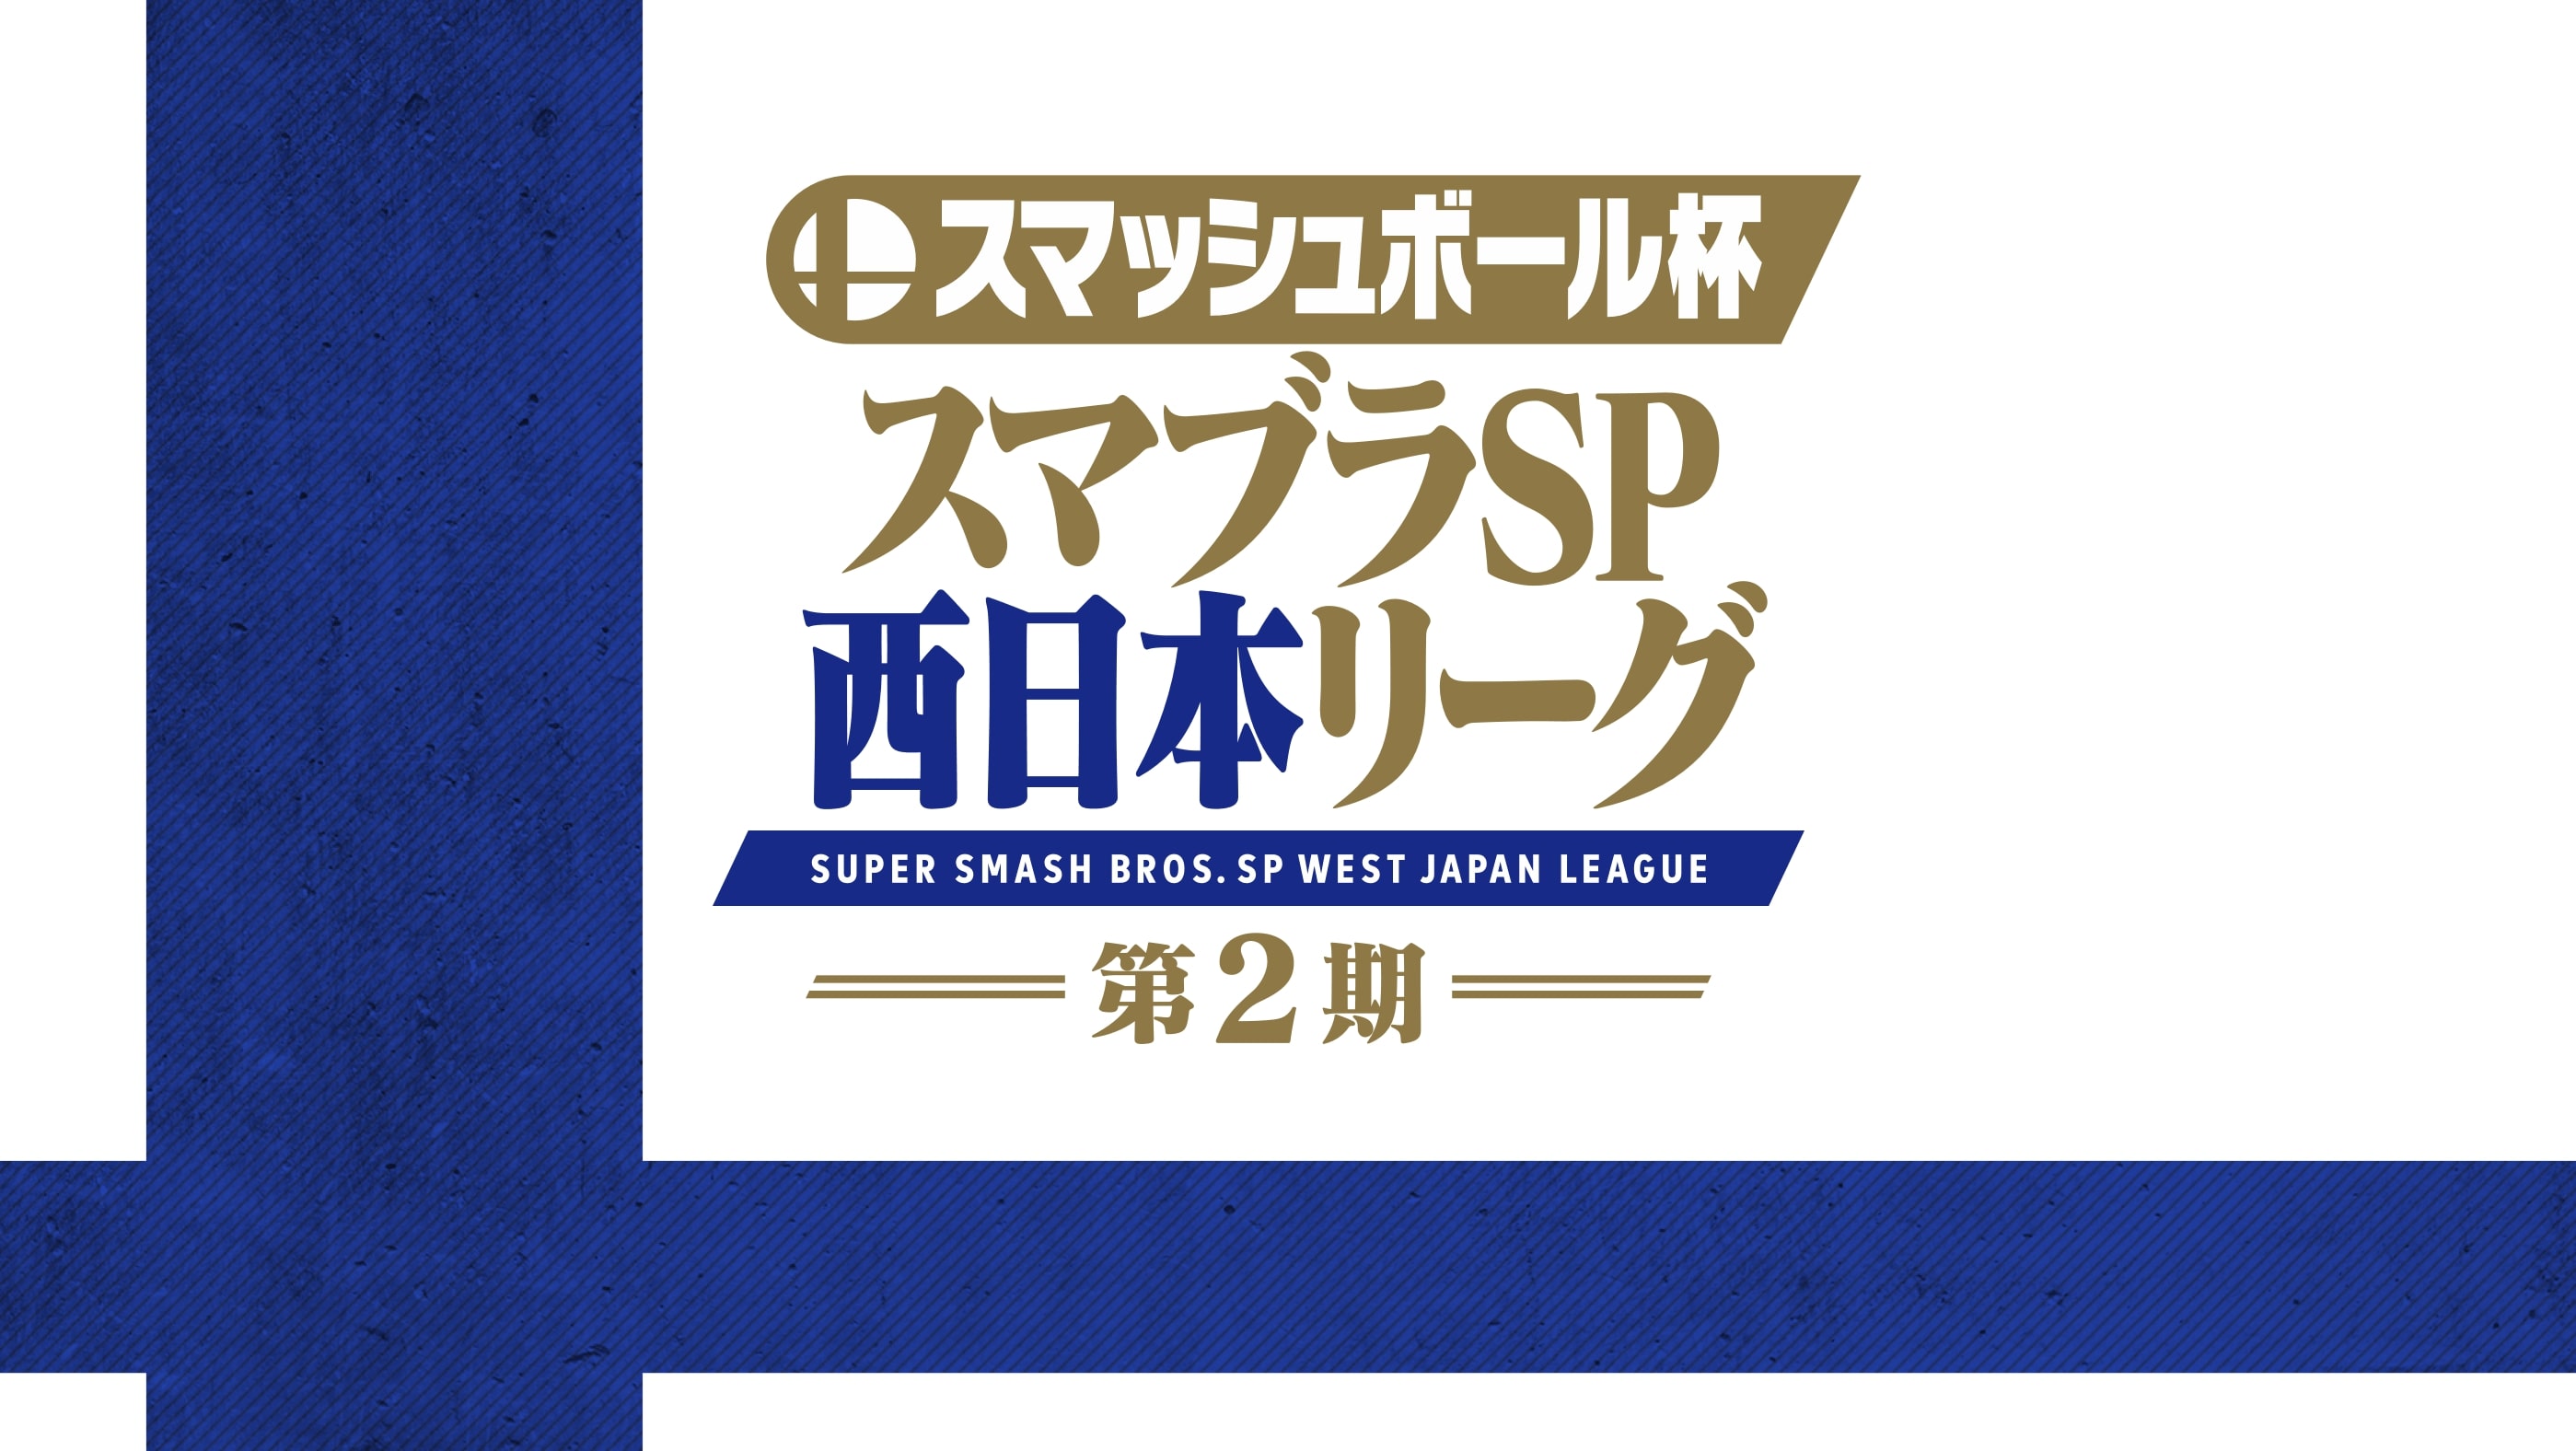 Smash Ball Cup Smash Bros. SP 西日本聯賽